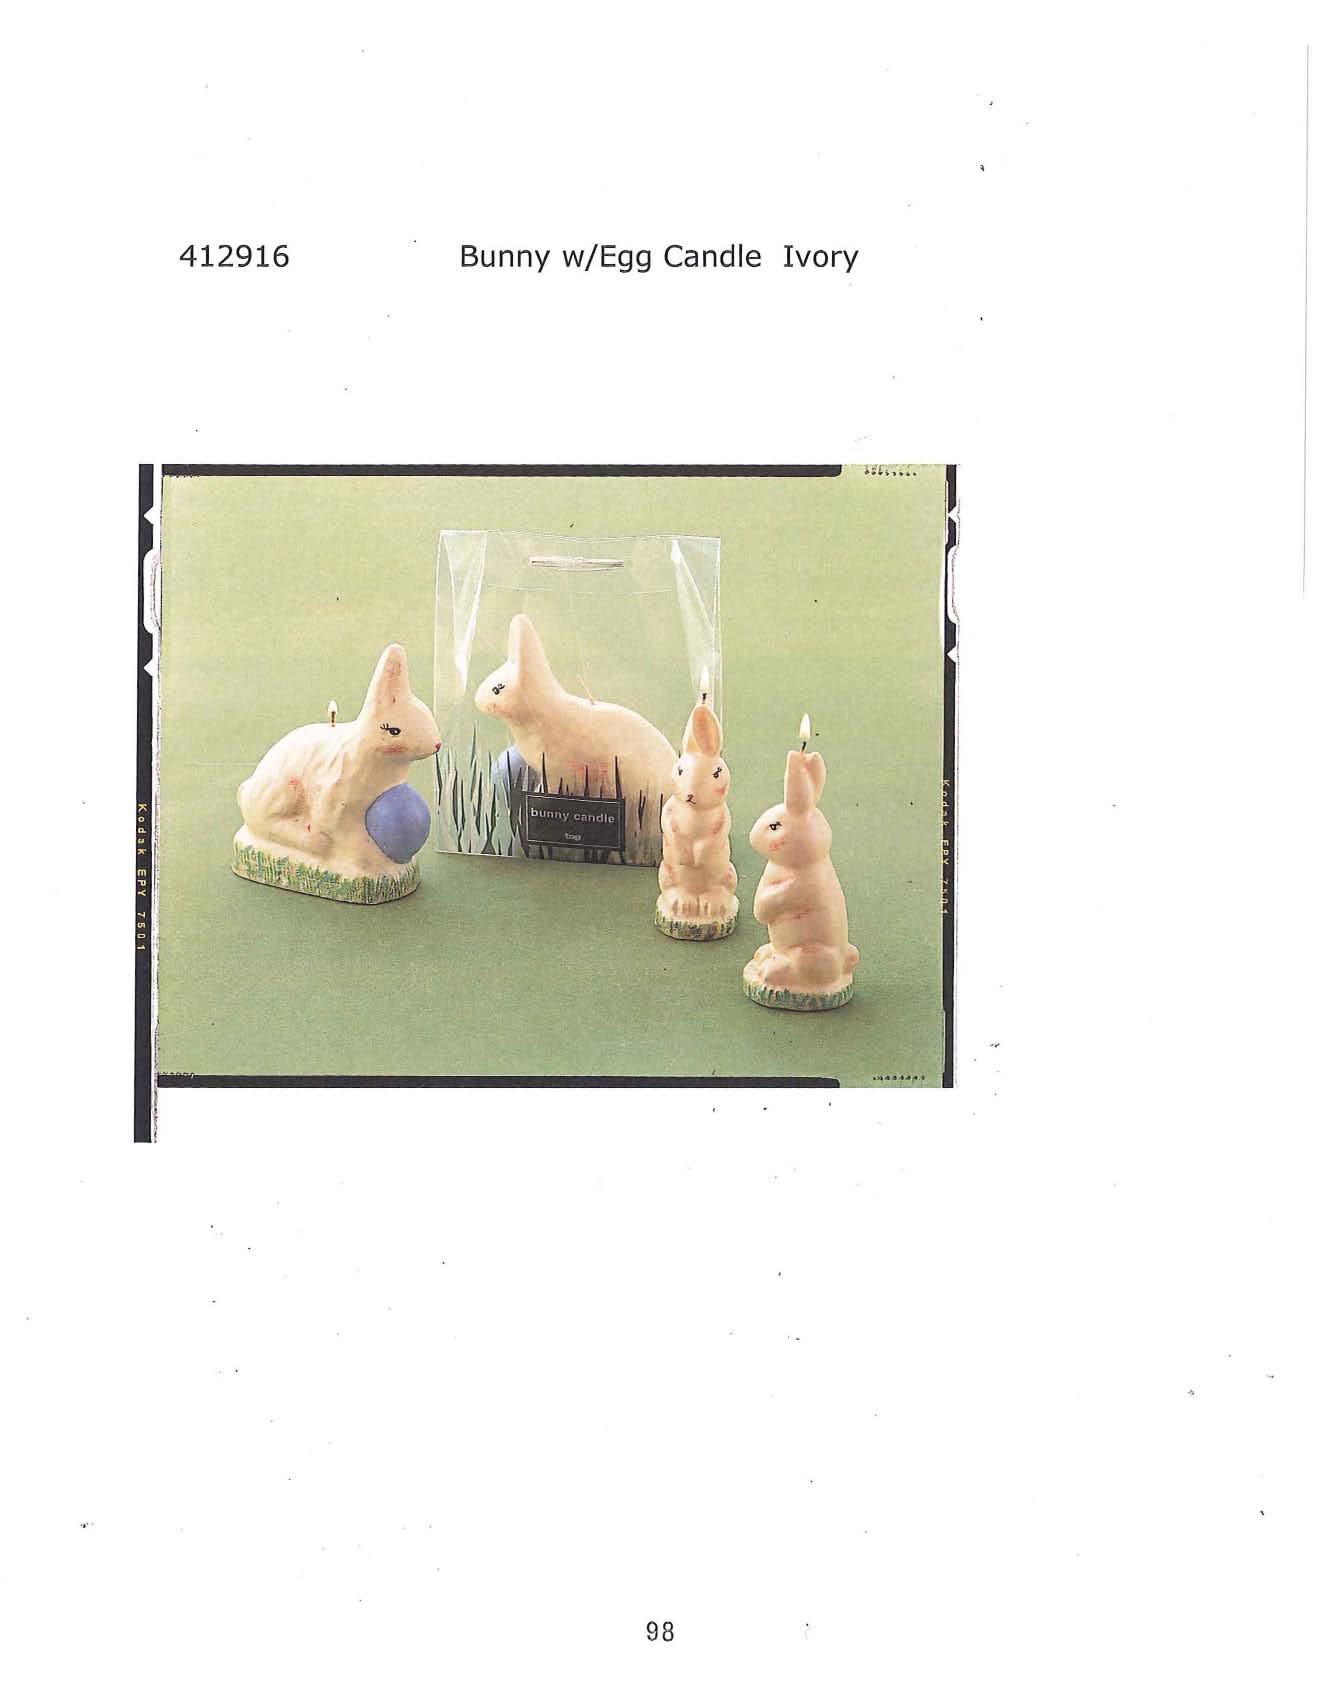 Bunny w/Egg Candle - Ivory